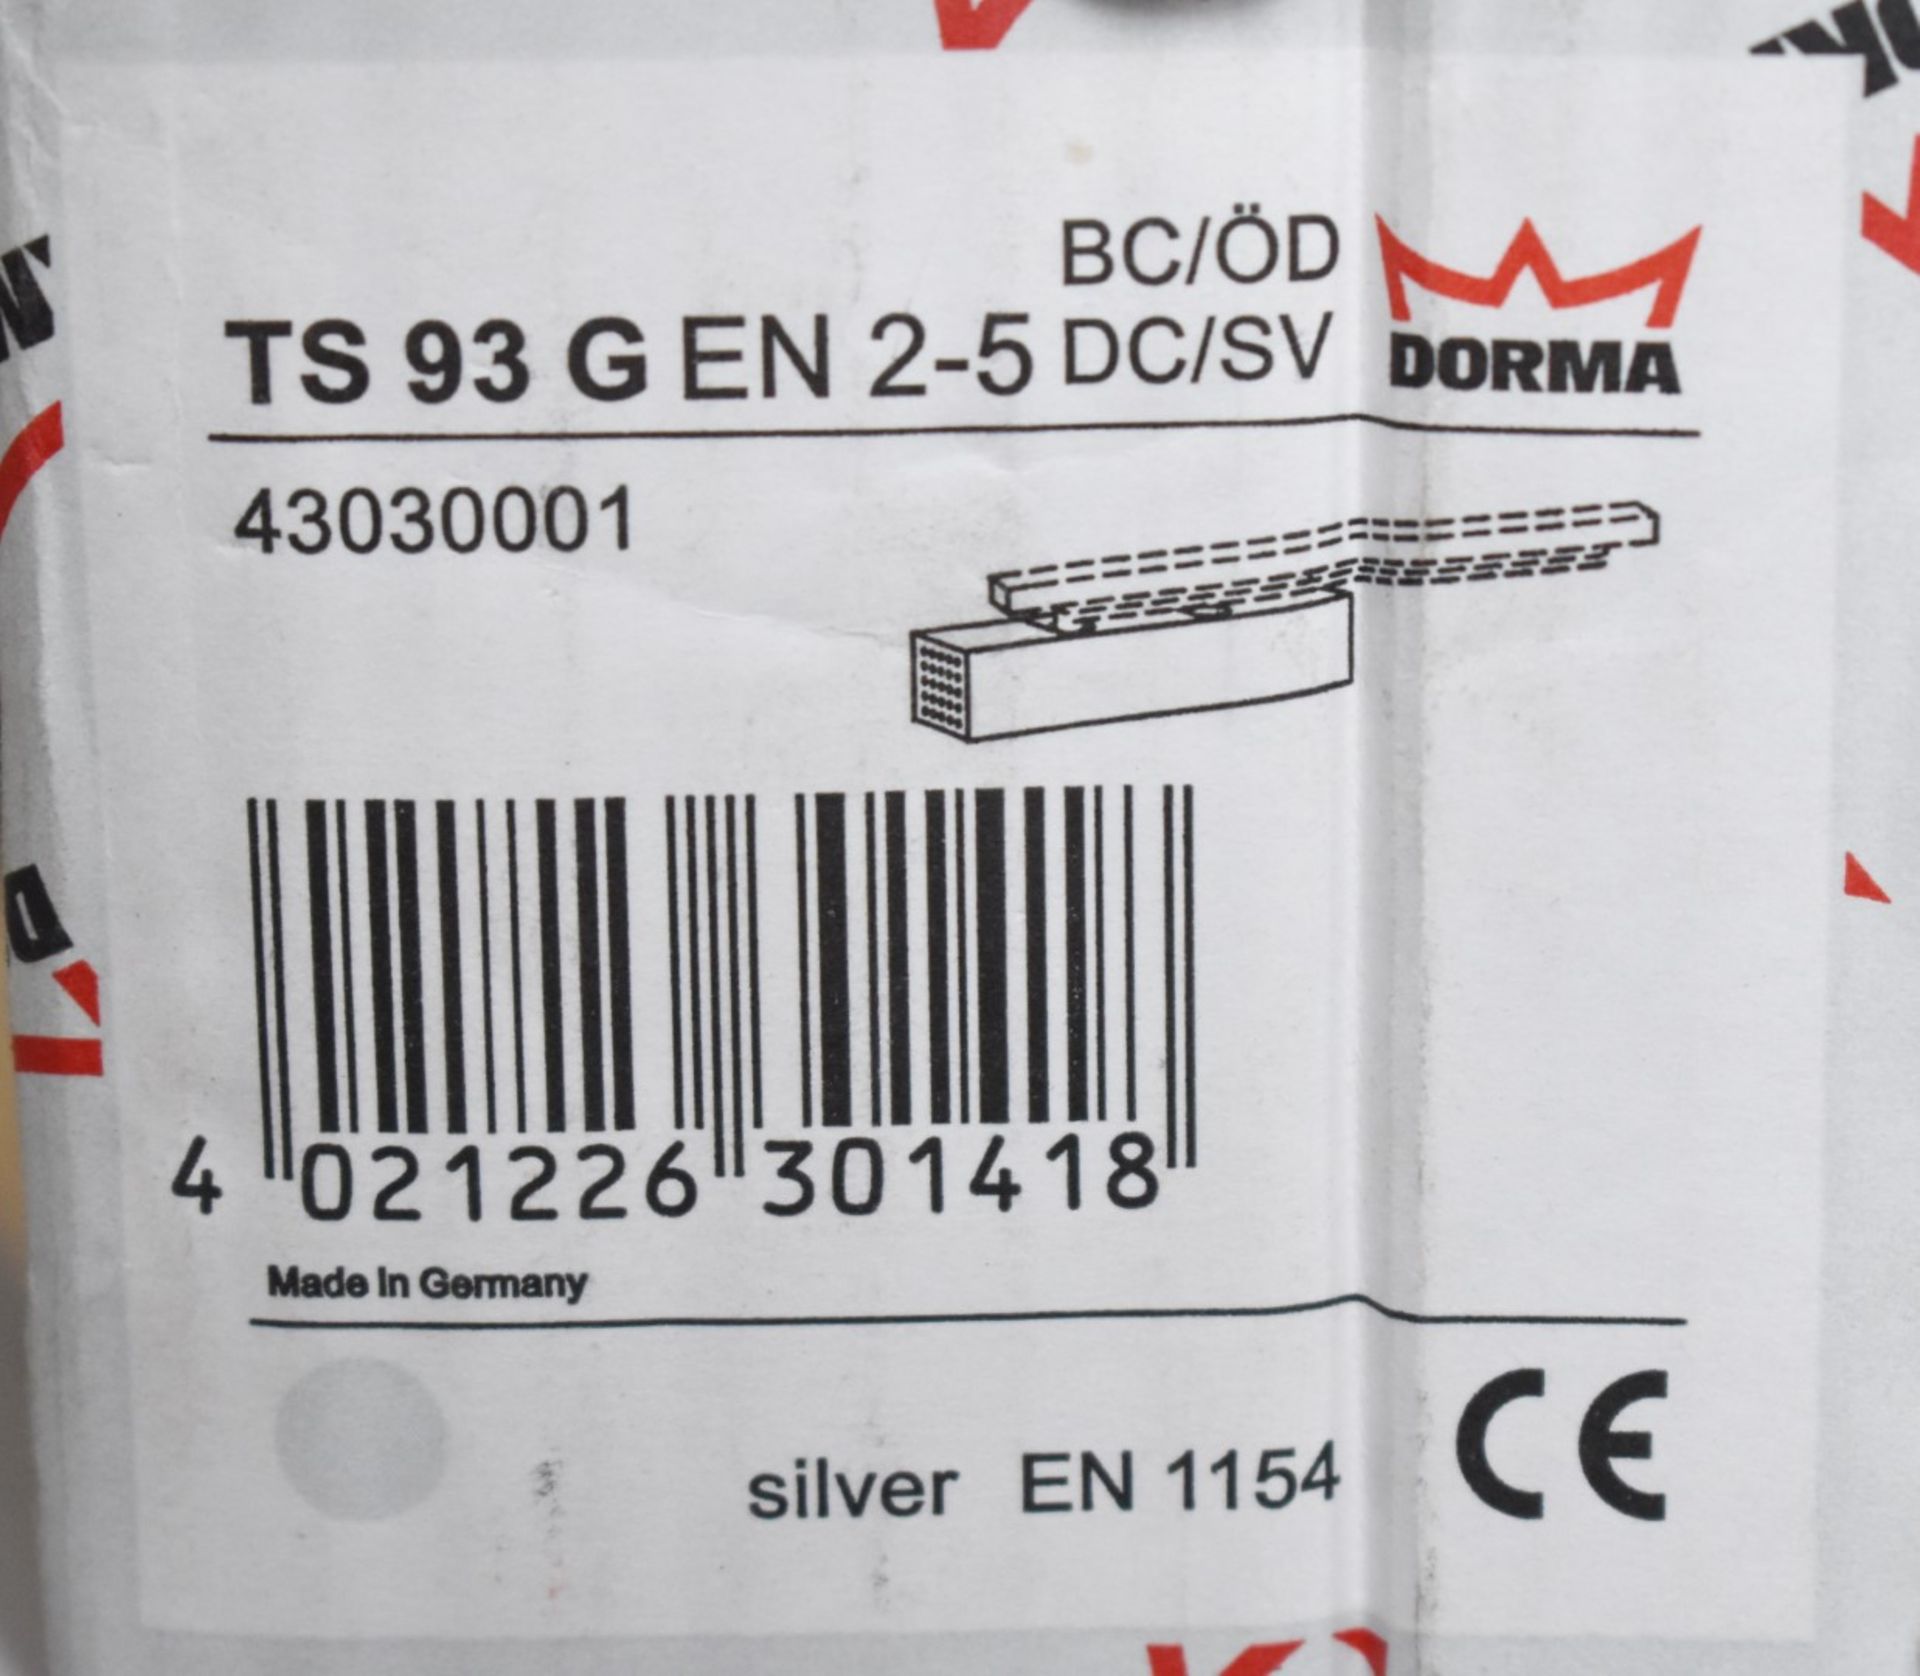 1 x Dorma TS93G Door Closer DC/SV - Silver Finish - EN 2-5 - Brand New Stock - Product Code 42030001 - Image 2 of 2